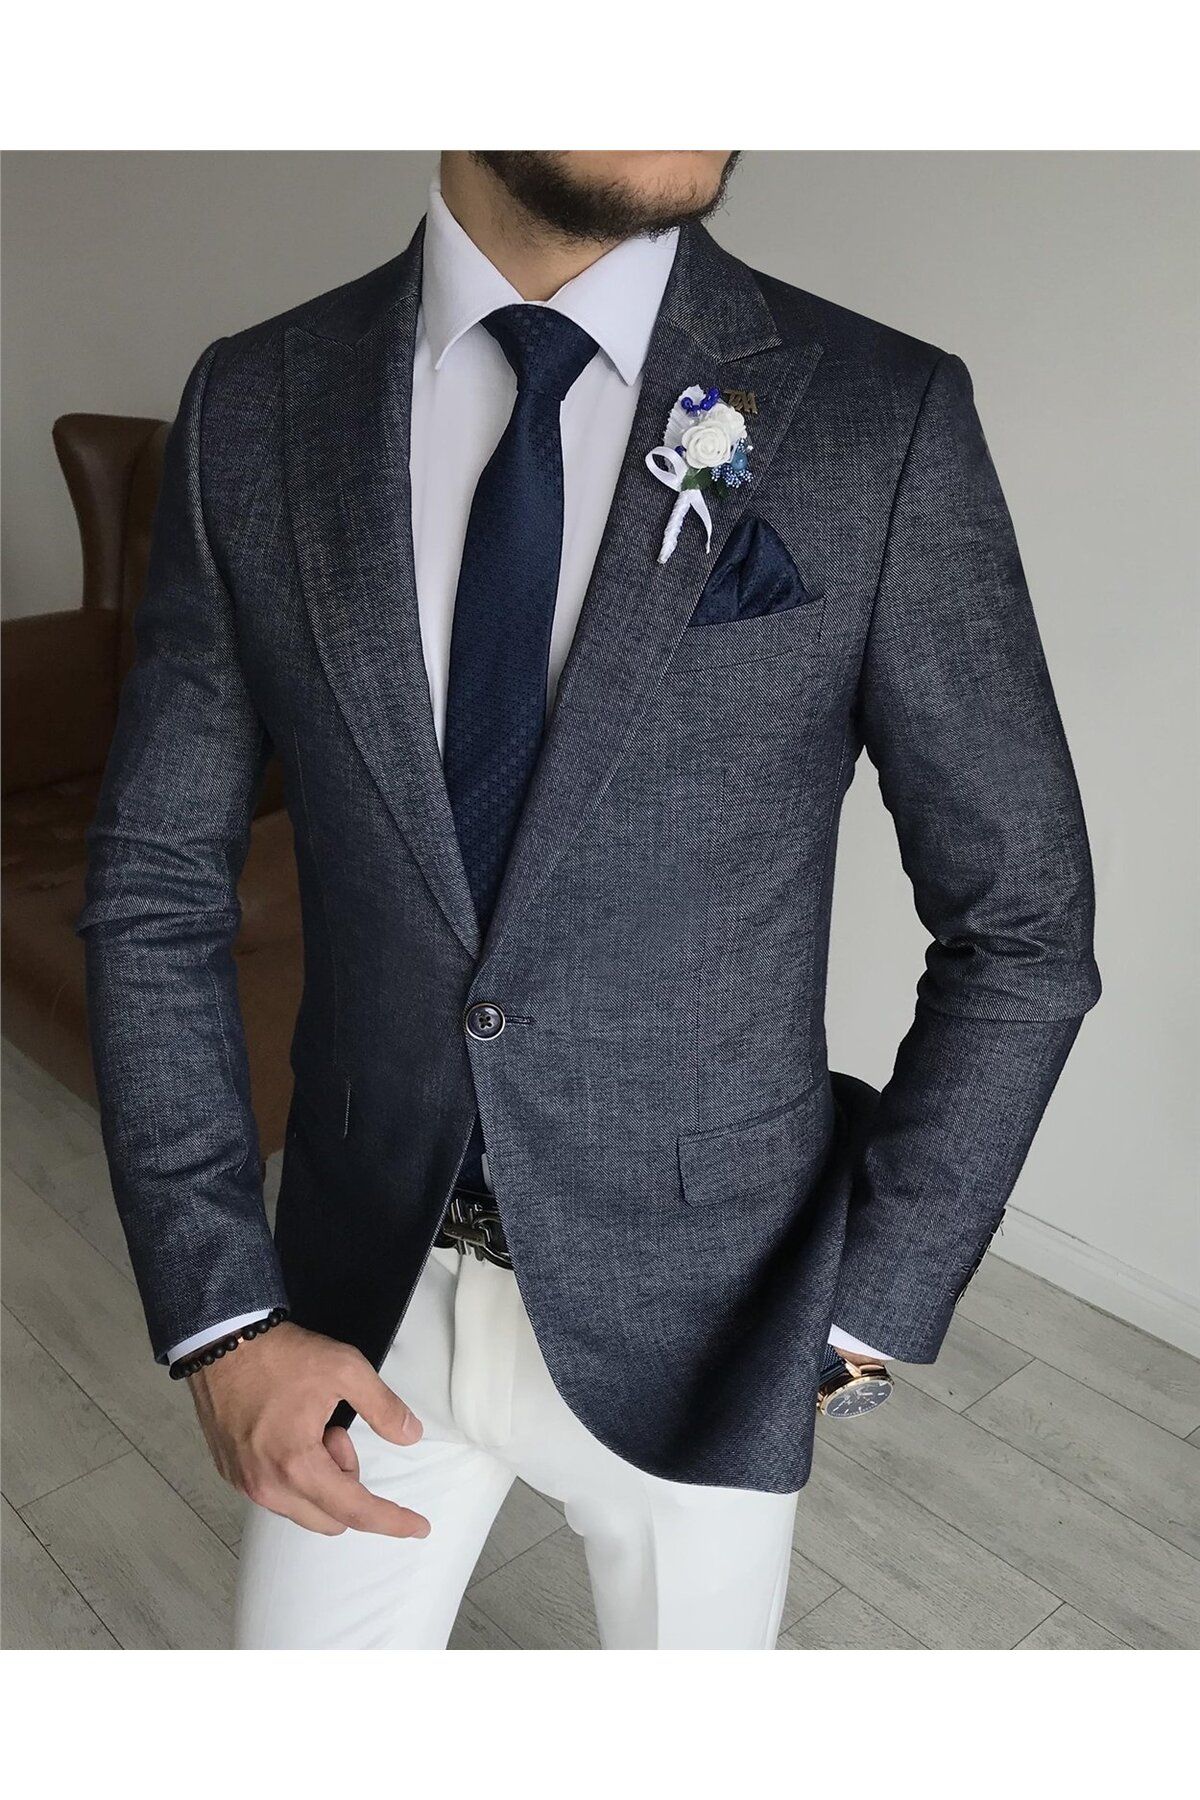 TerziAdemAltun İtalyan Stil Slim Fit Erkek Blazer Tek Ceket Lacivert T7600